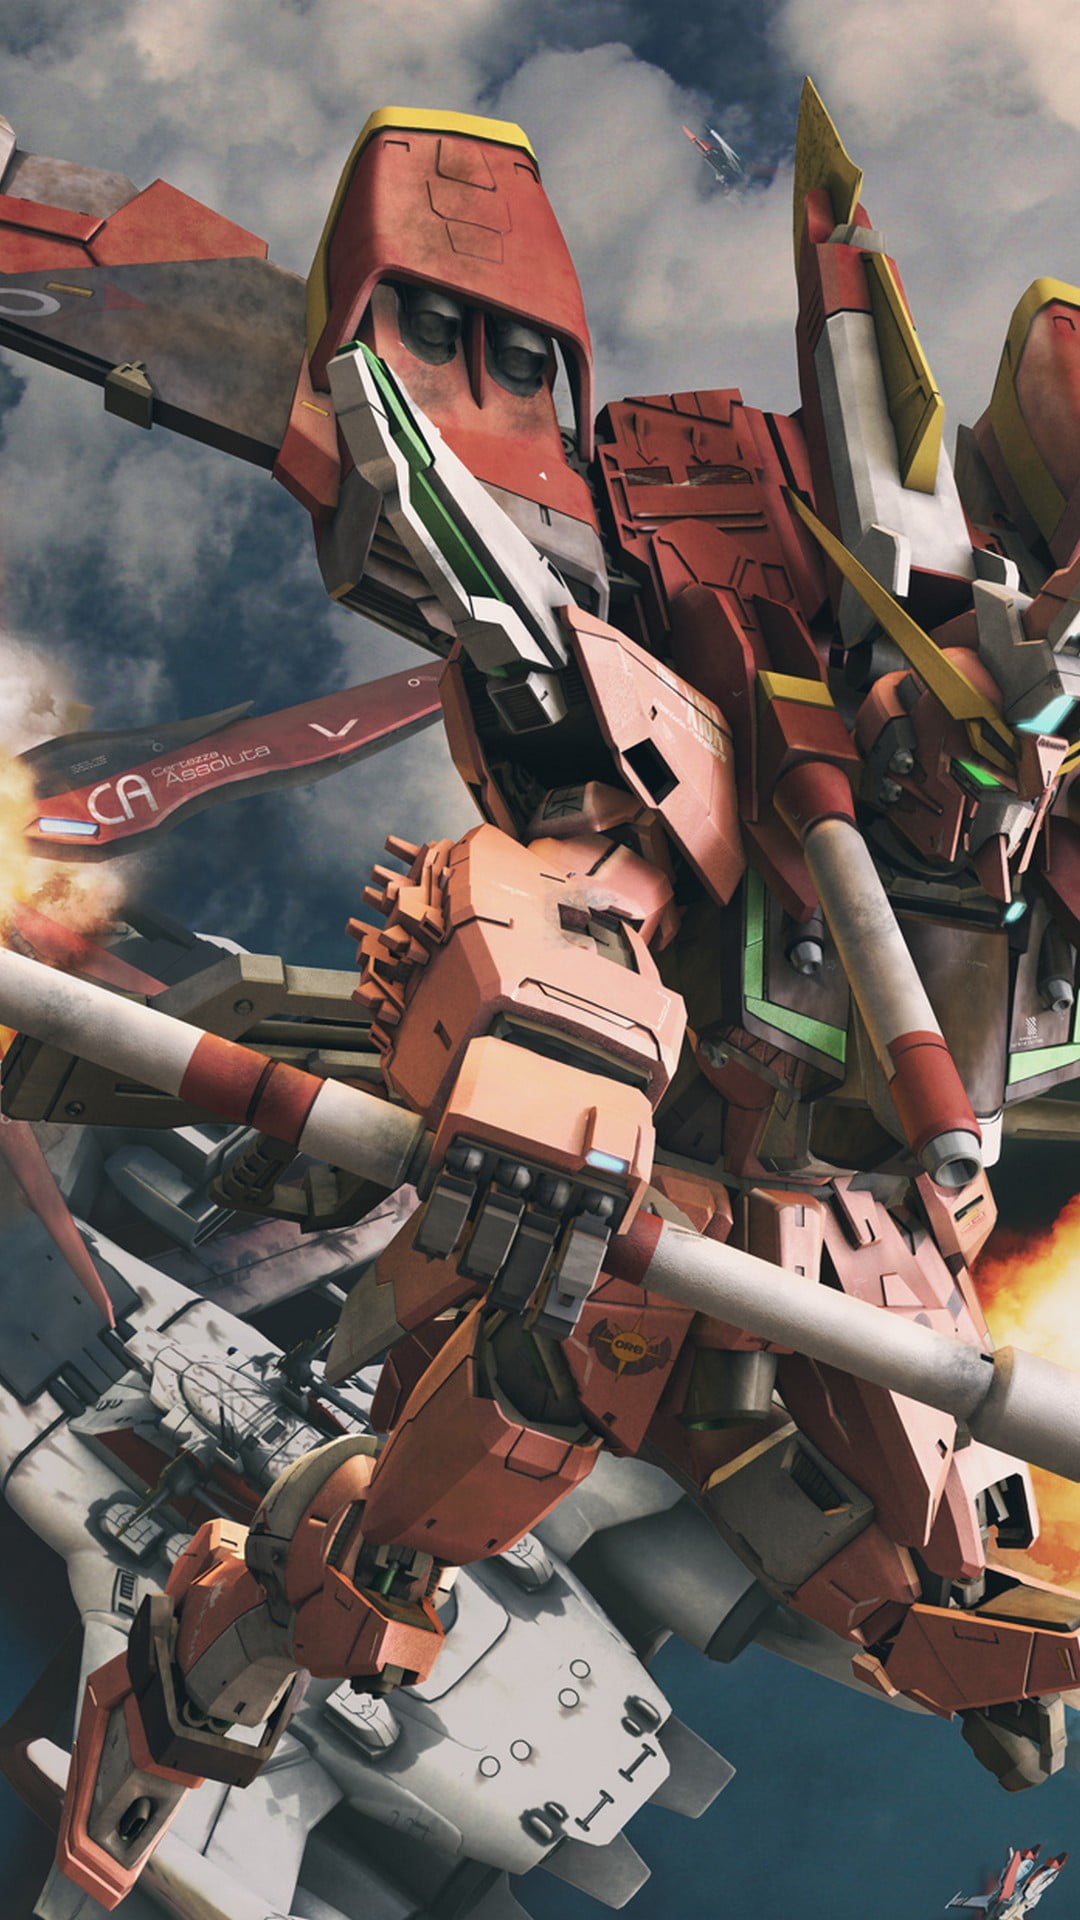 Gundam IPhone Wallpaper 67 images